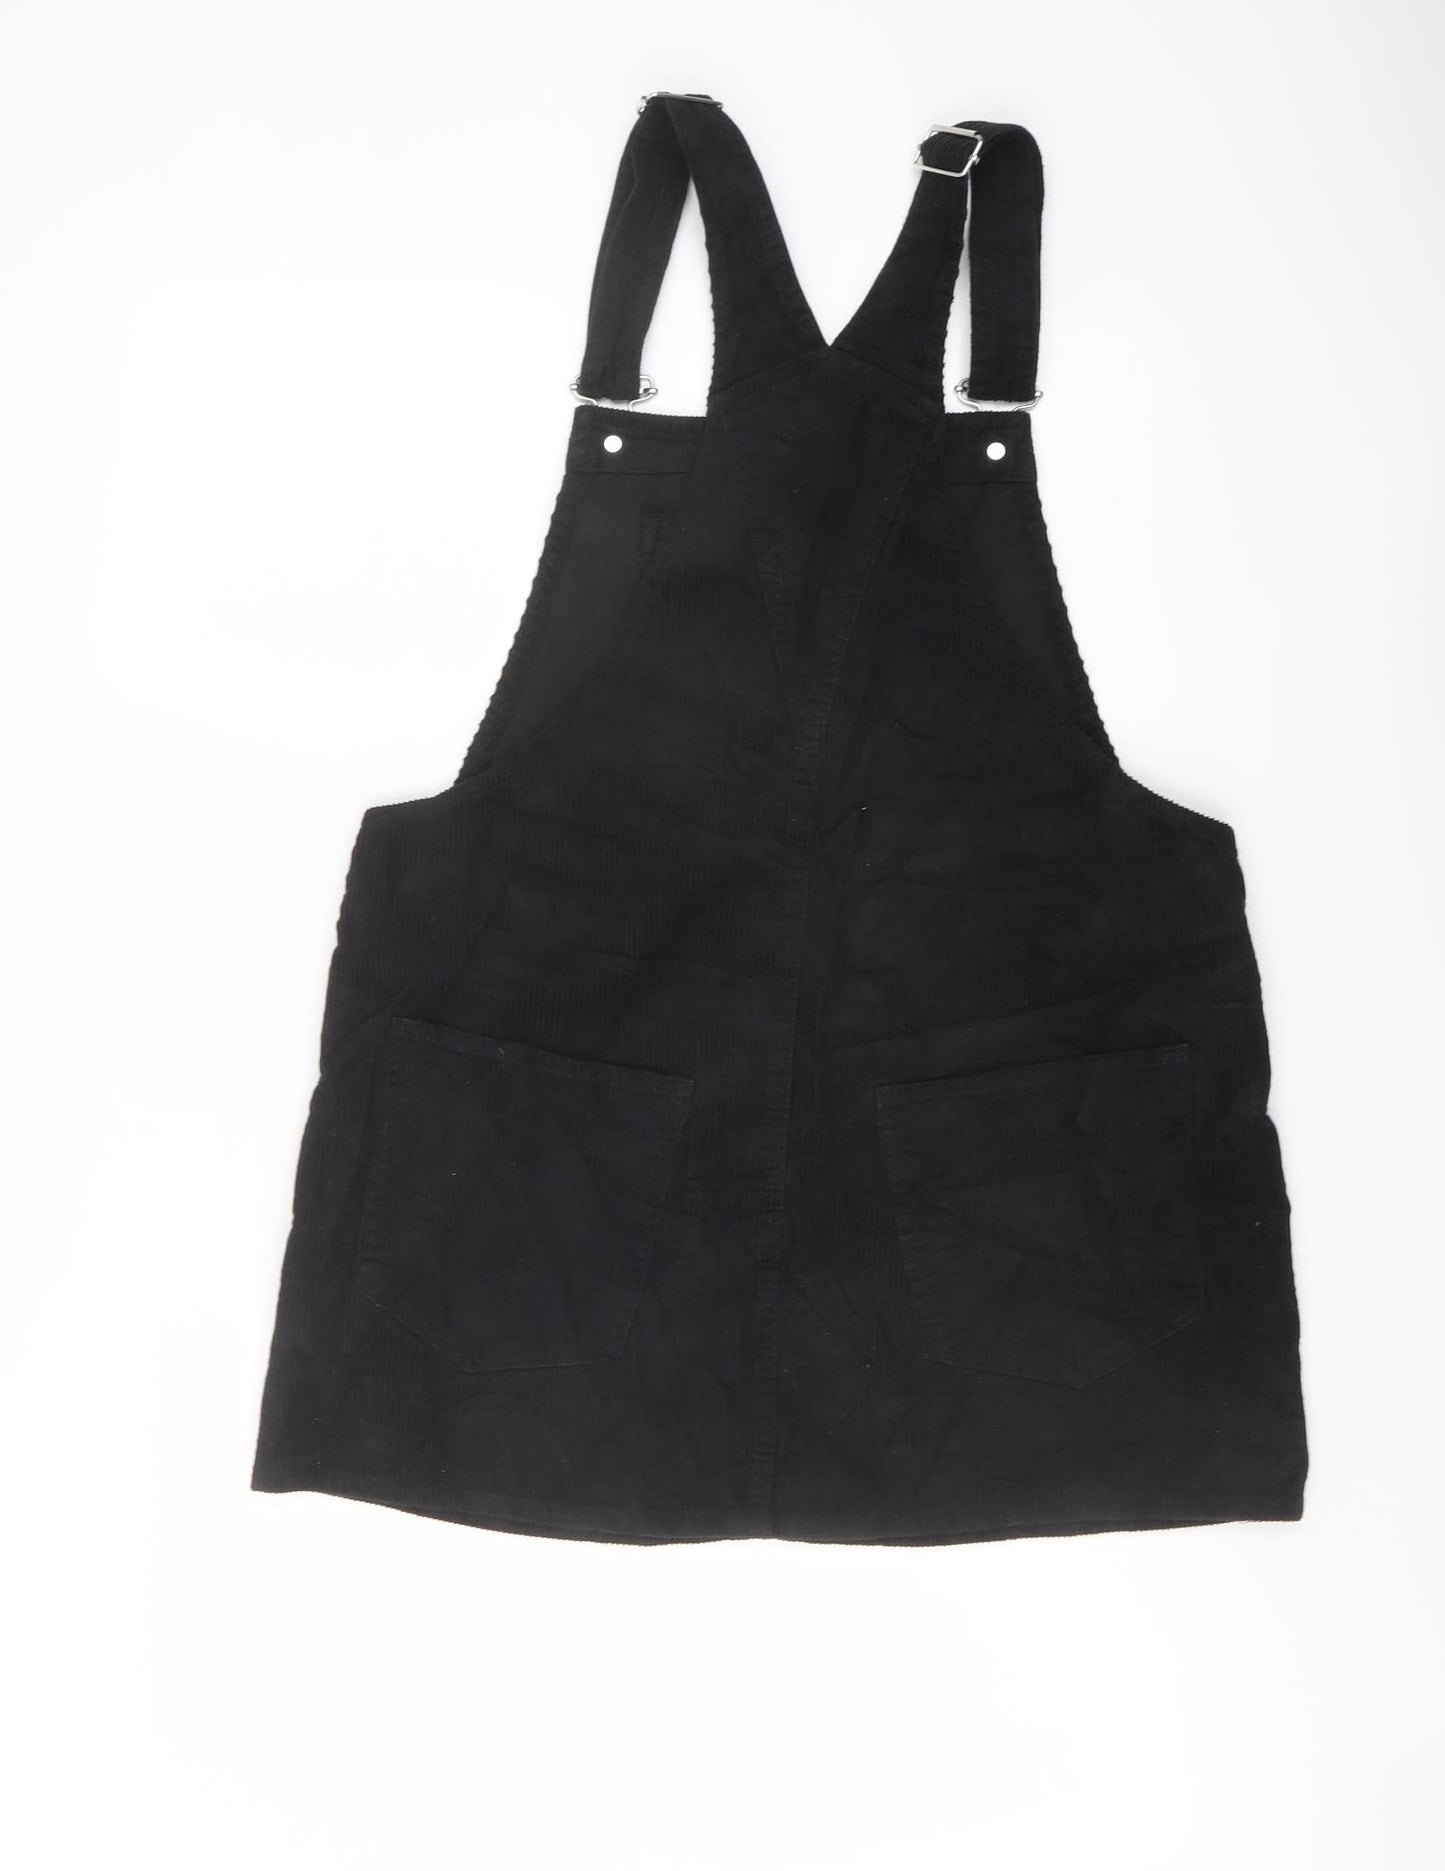 H&M Womens Black Cotton Pinafore/Dungaree Dress Size M Square Neck Buckle